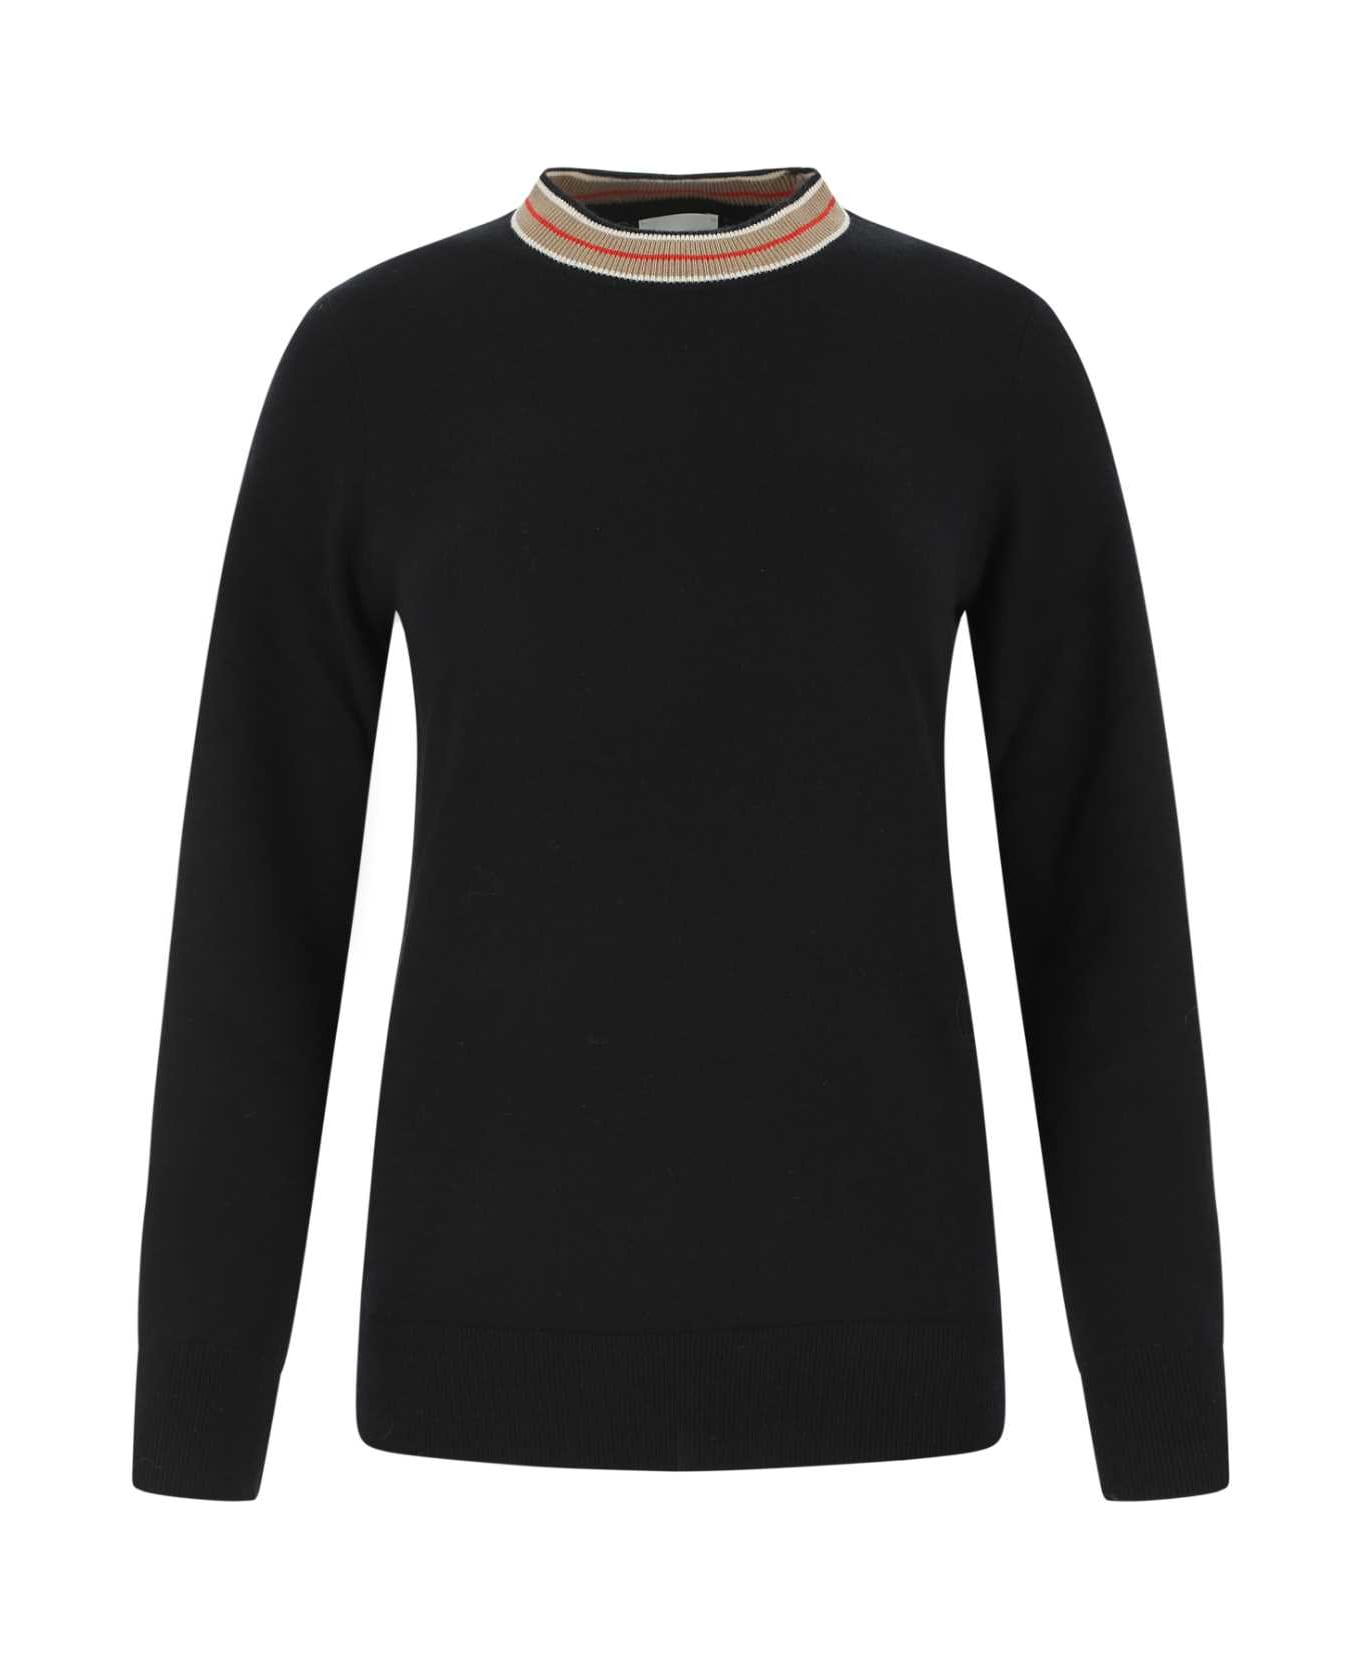 Burberry Black Cashmere Sweater - A1189